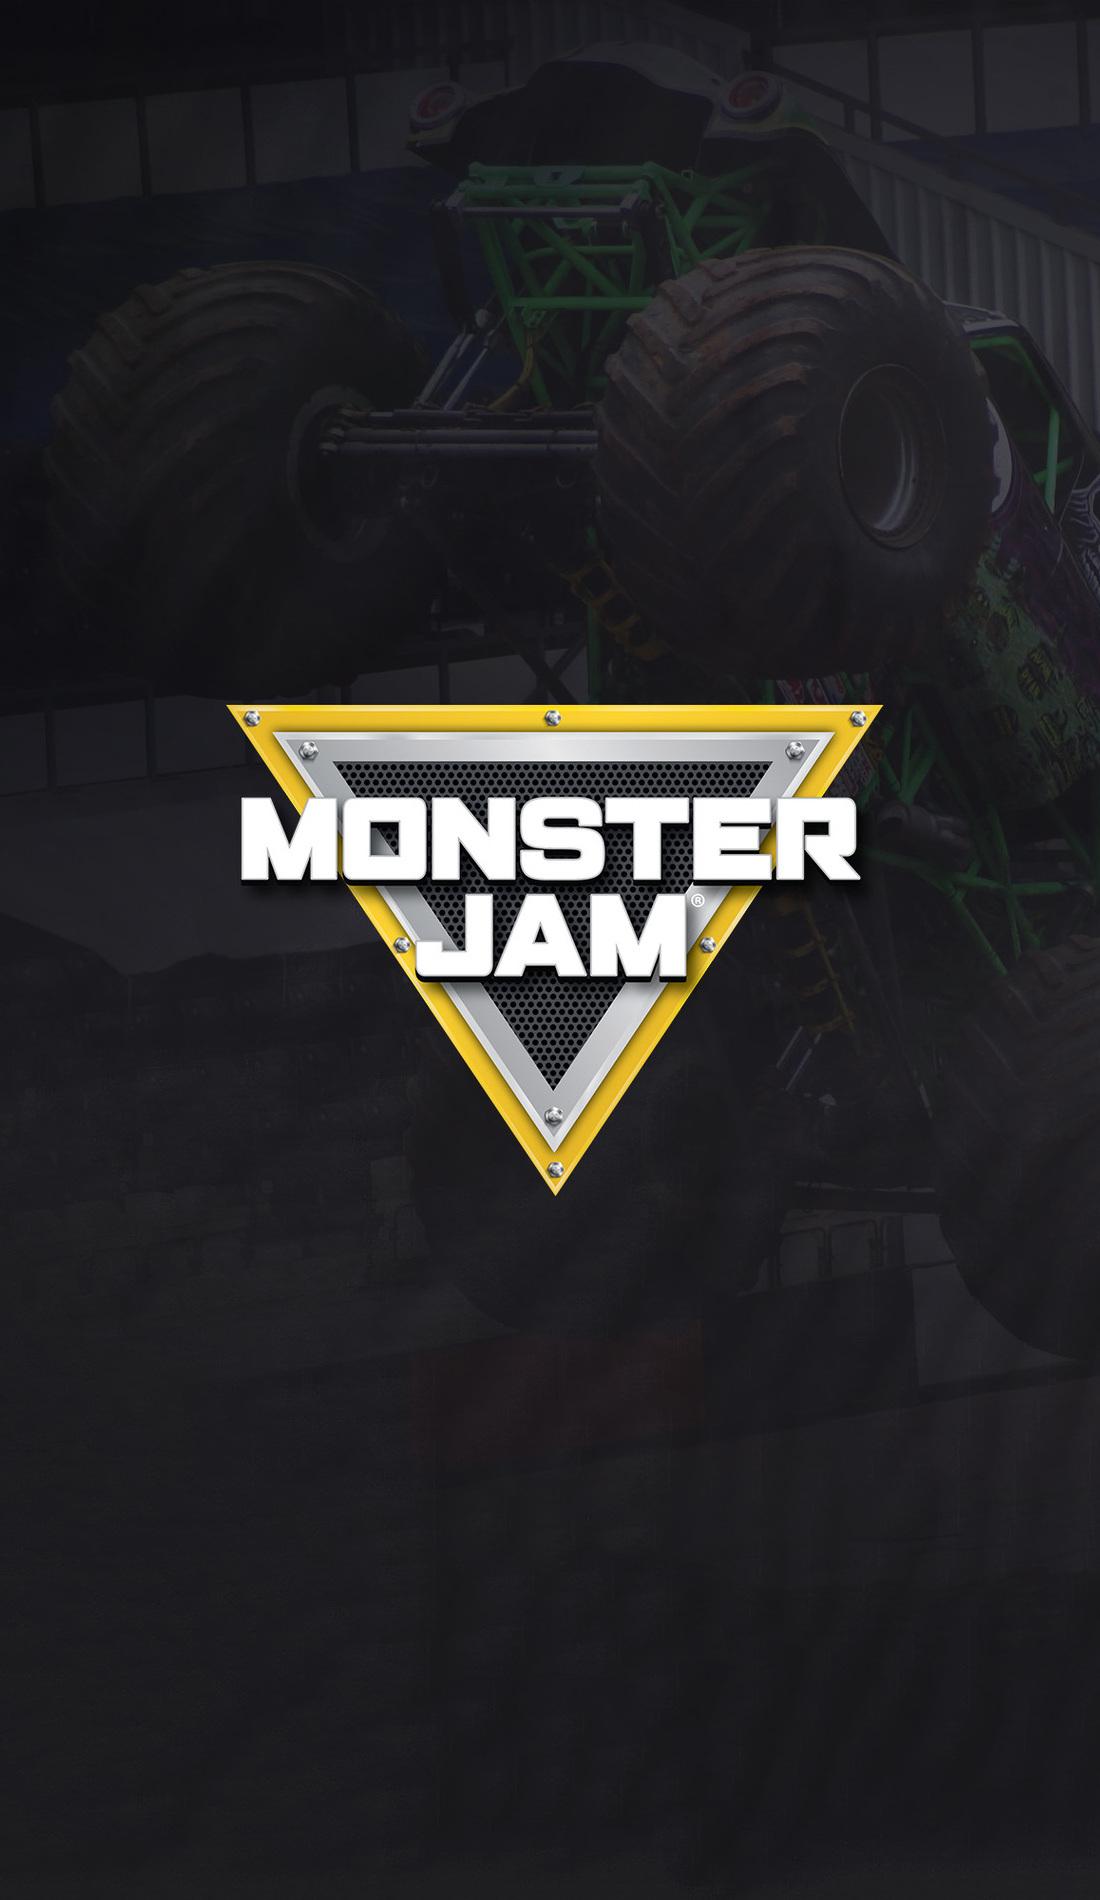 Monster Jam Orlando Tickets 2019